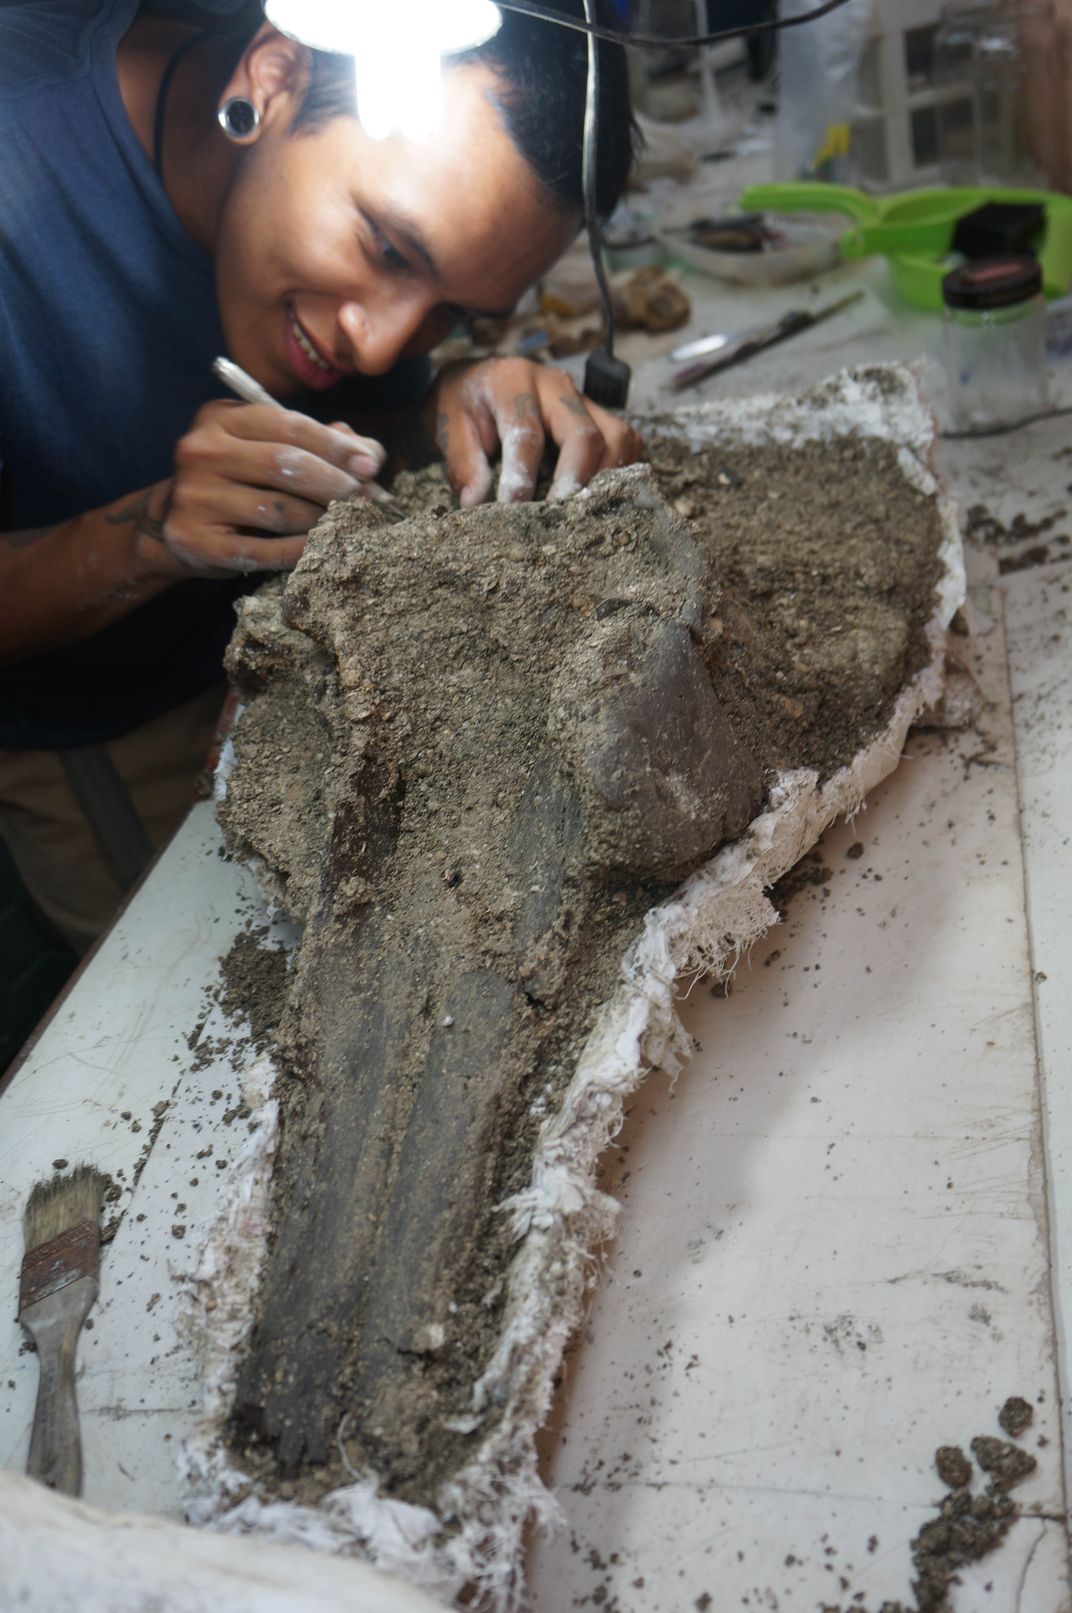 Paleontologist working on skull-shaped object